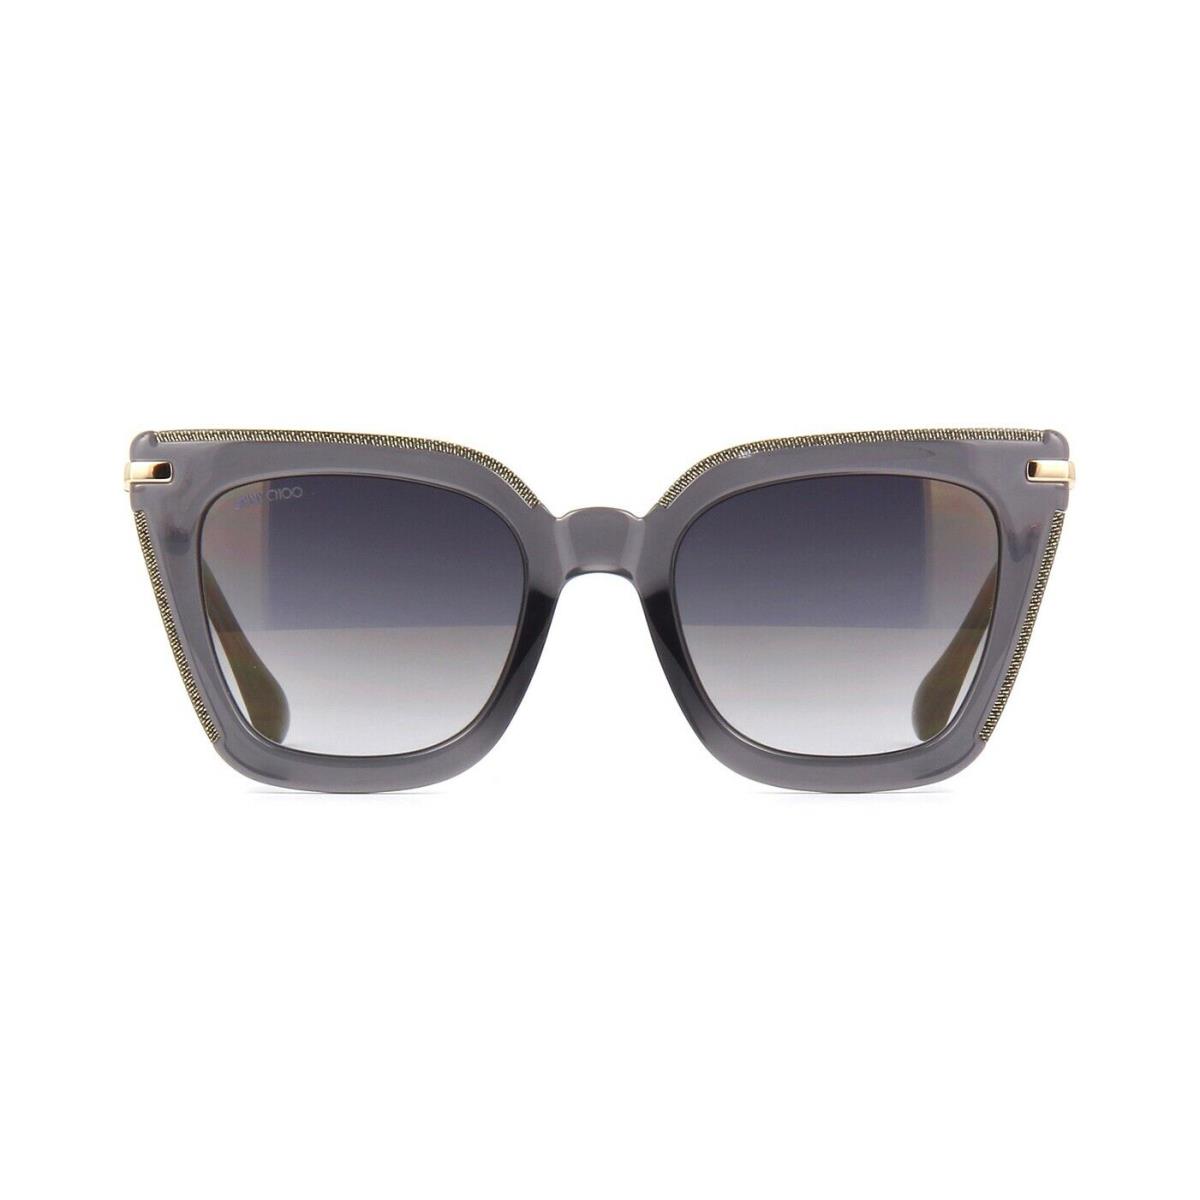 Jimmy Choo Ciara/g/s Grey/grey Shaded with Light Gold Flash Eib/fq Sunglasses - Frame: Gray, Lens: Gray